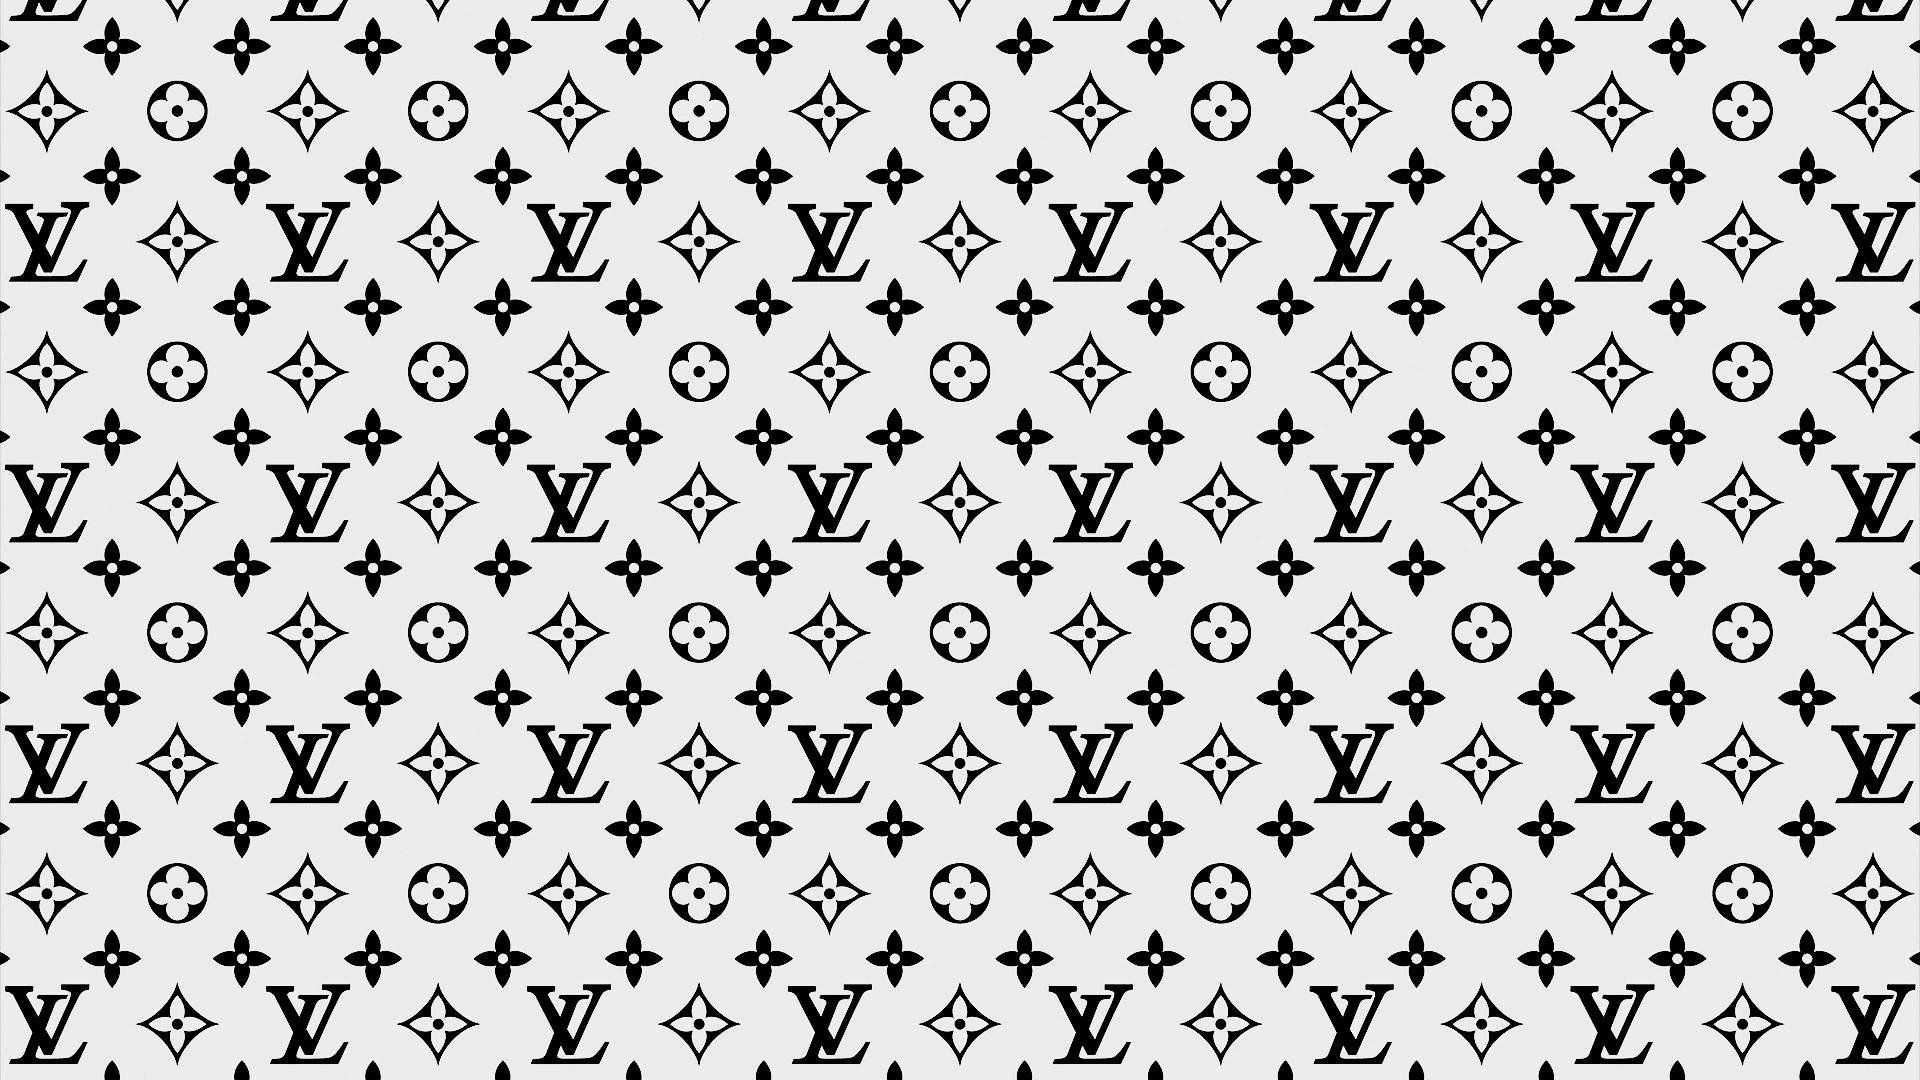 Louis Vuitton hình nền đen trắng